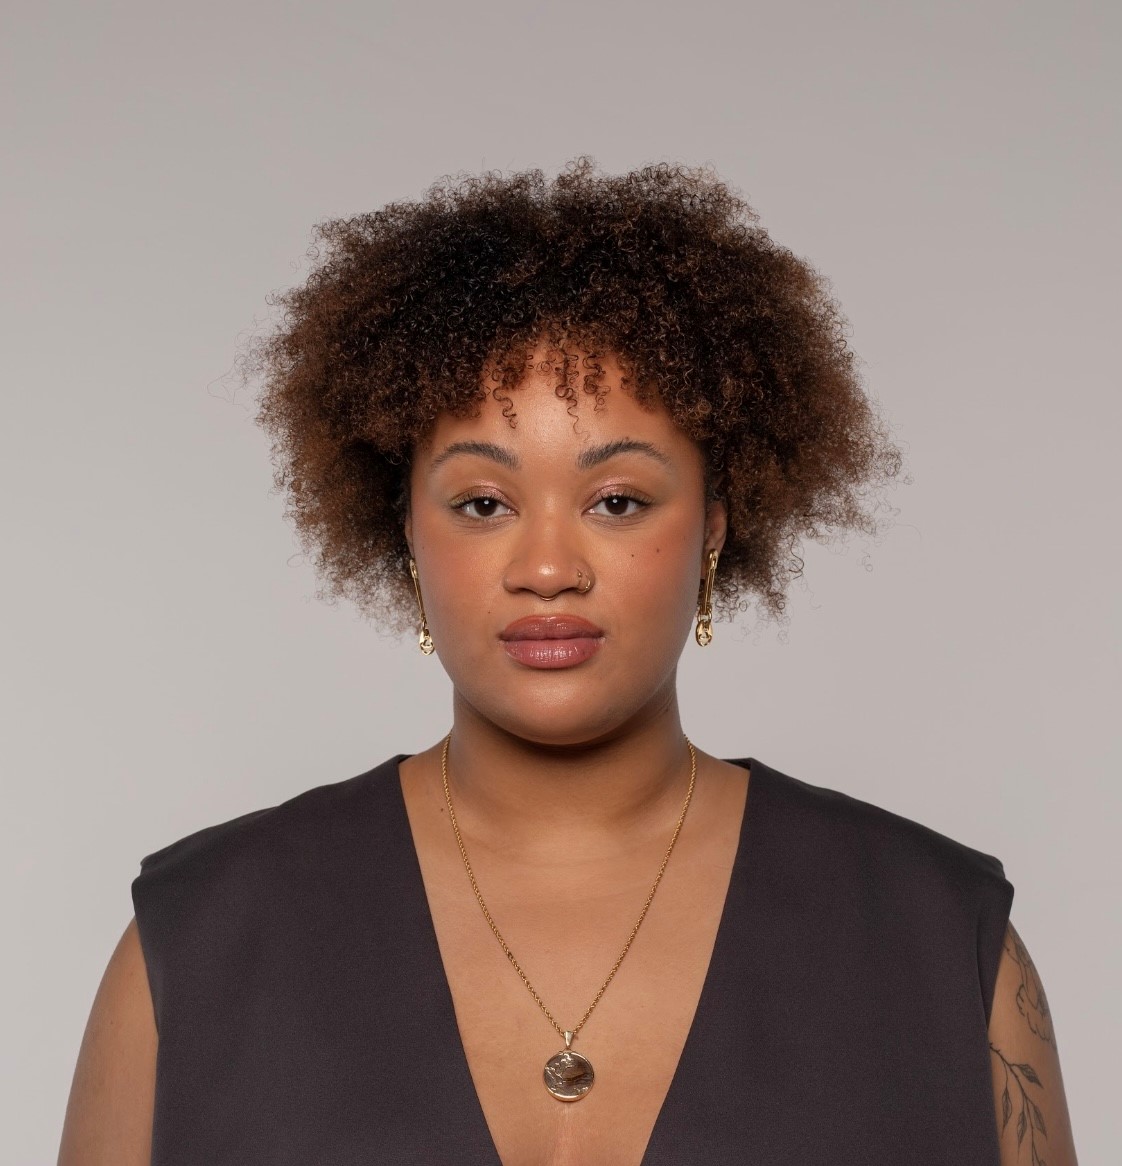 Confirmed speaker | Mica Sefia | EDI Project Coordinator, Leeds Conservatoire | Black Lives in Music | Musician | More info to follow. @BLKLivesinMusic @NTEconomy @MerseysideVrp @ZaraQuigg @LJMUPHI @cathymonty_psy @SaferPartying @Sarahcmorton @FMeasham @irefrea @globaldrugsurvy